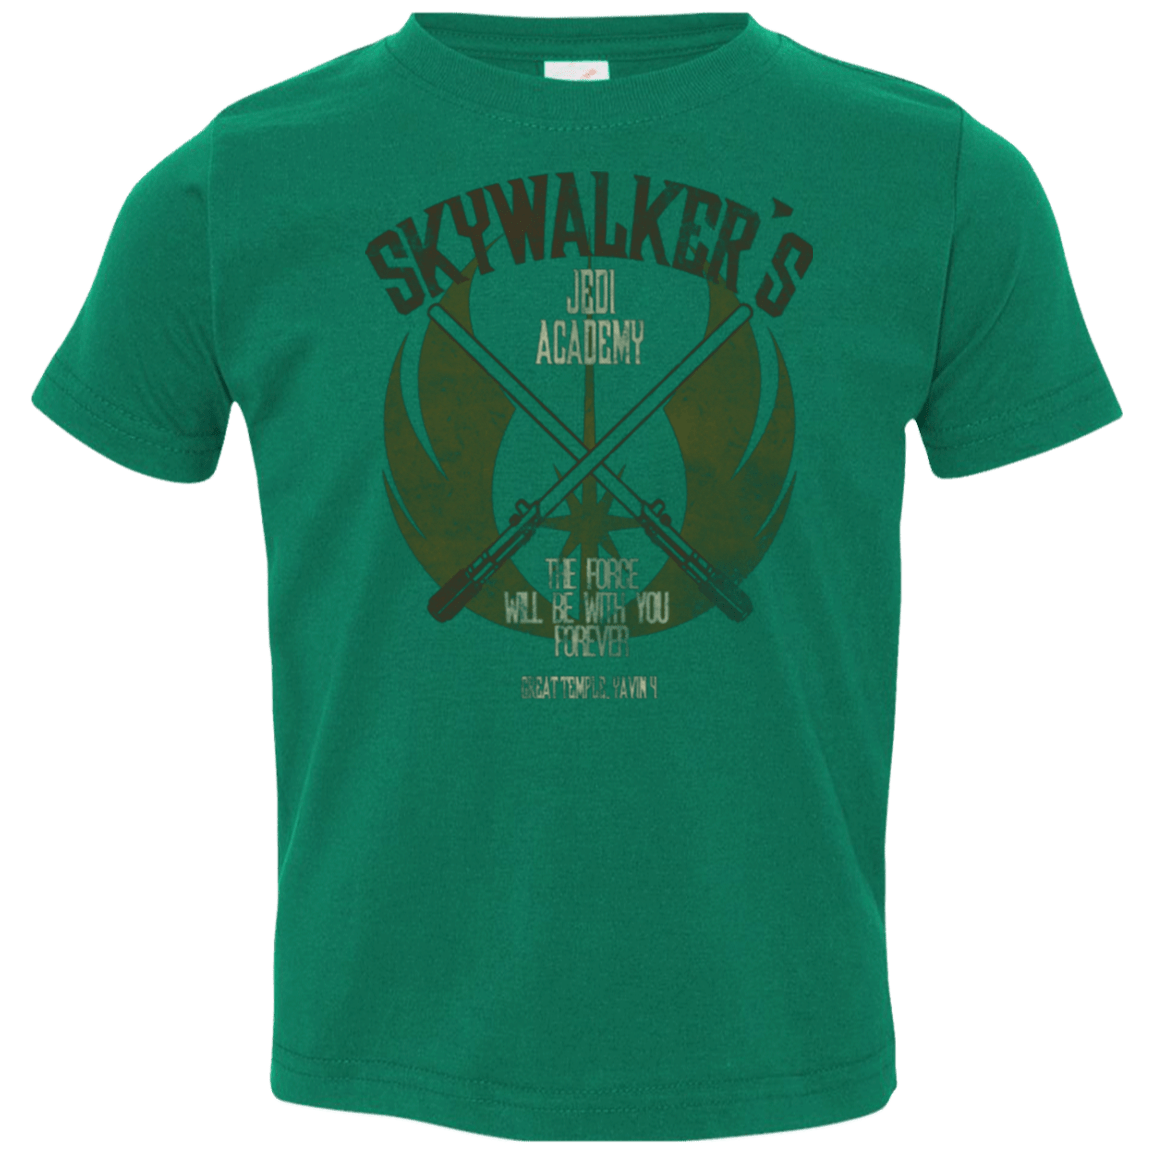 Skywalker's Jedi Academy Toddler Premium T-Shirt